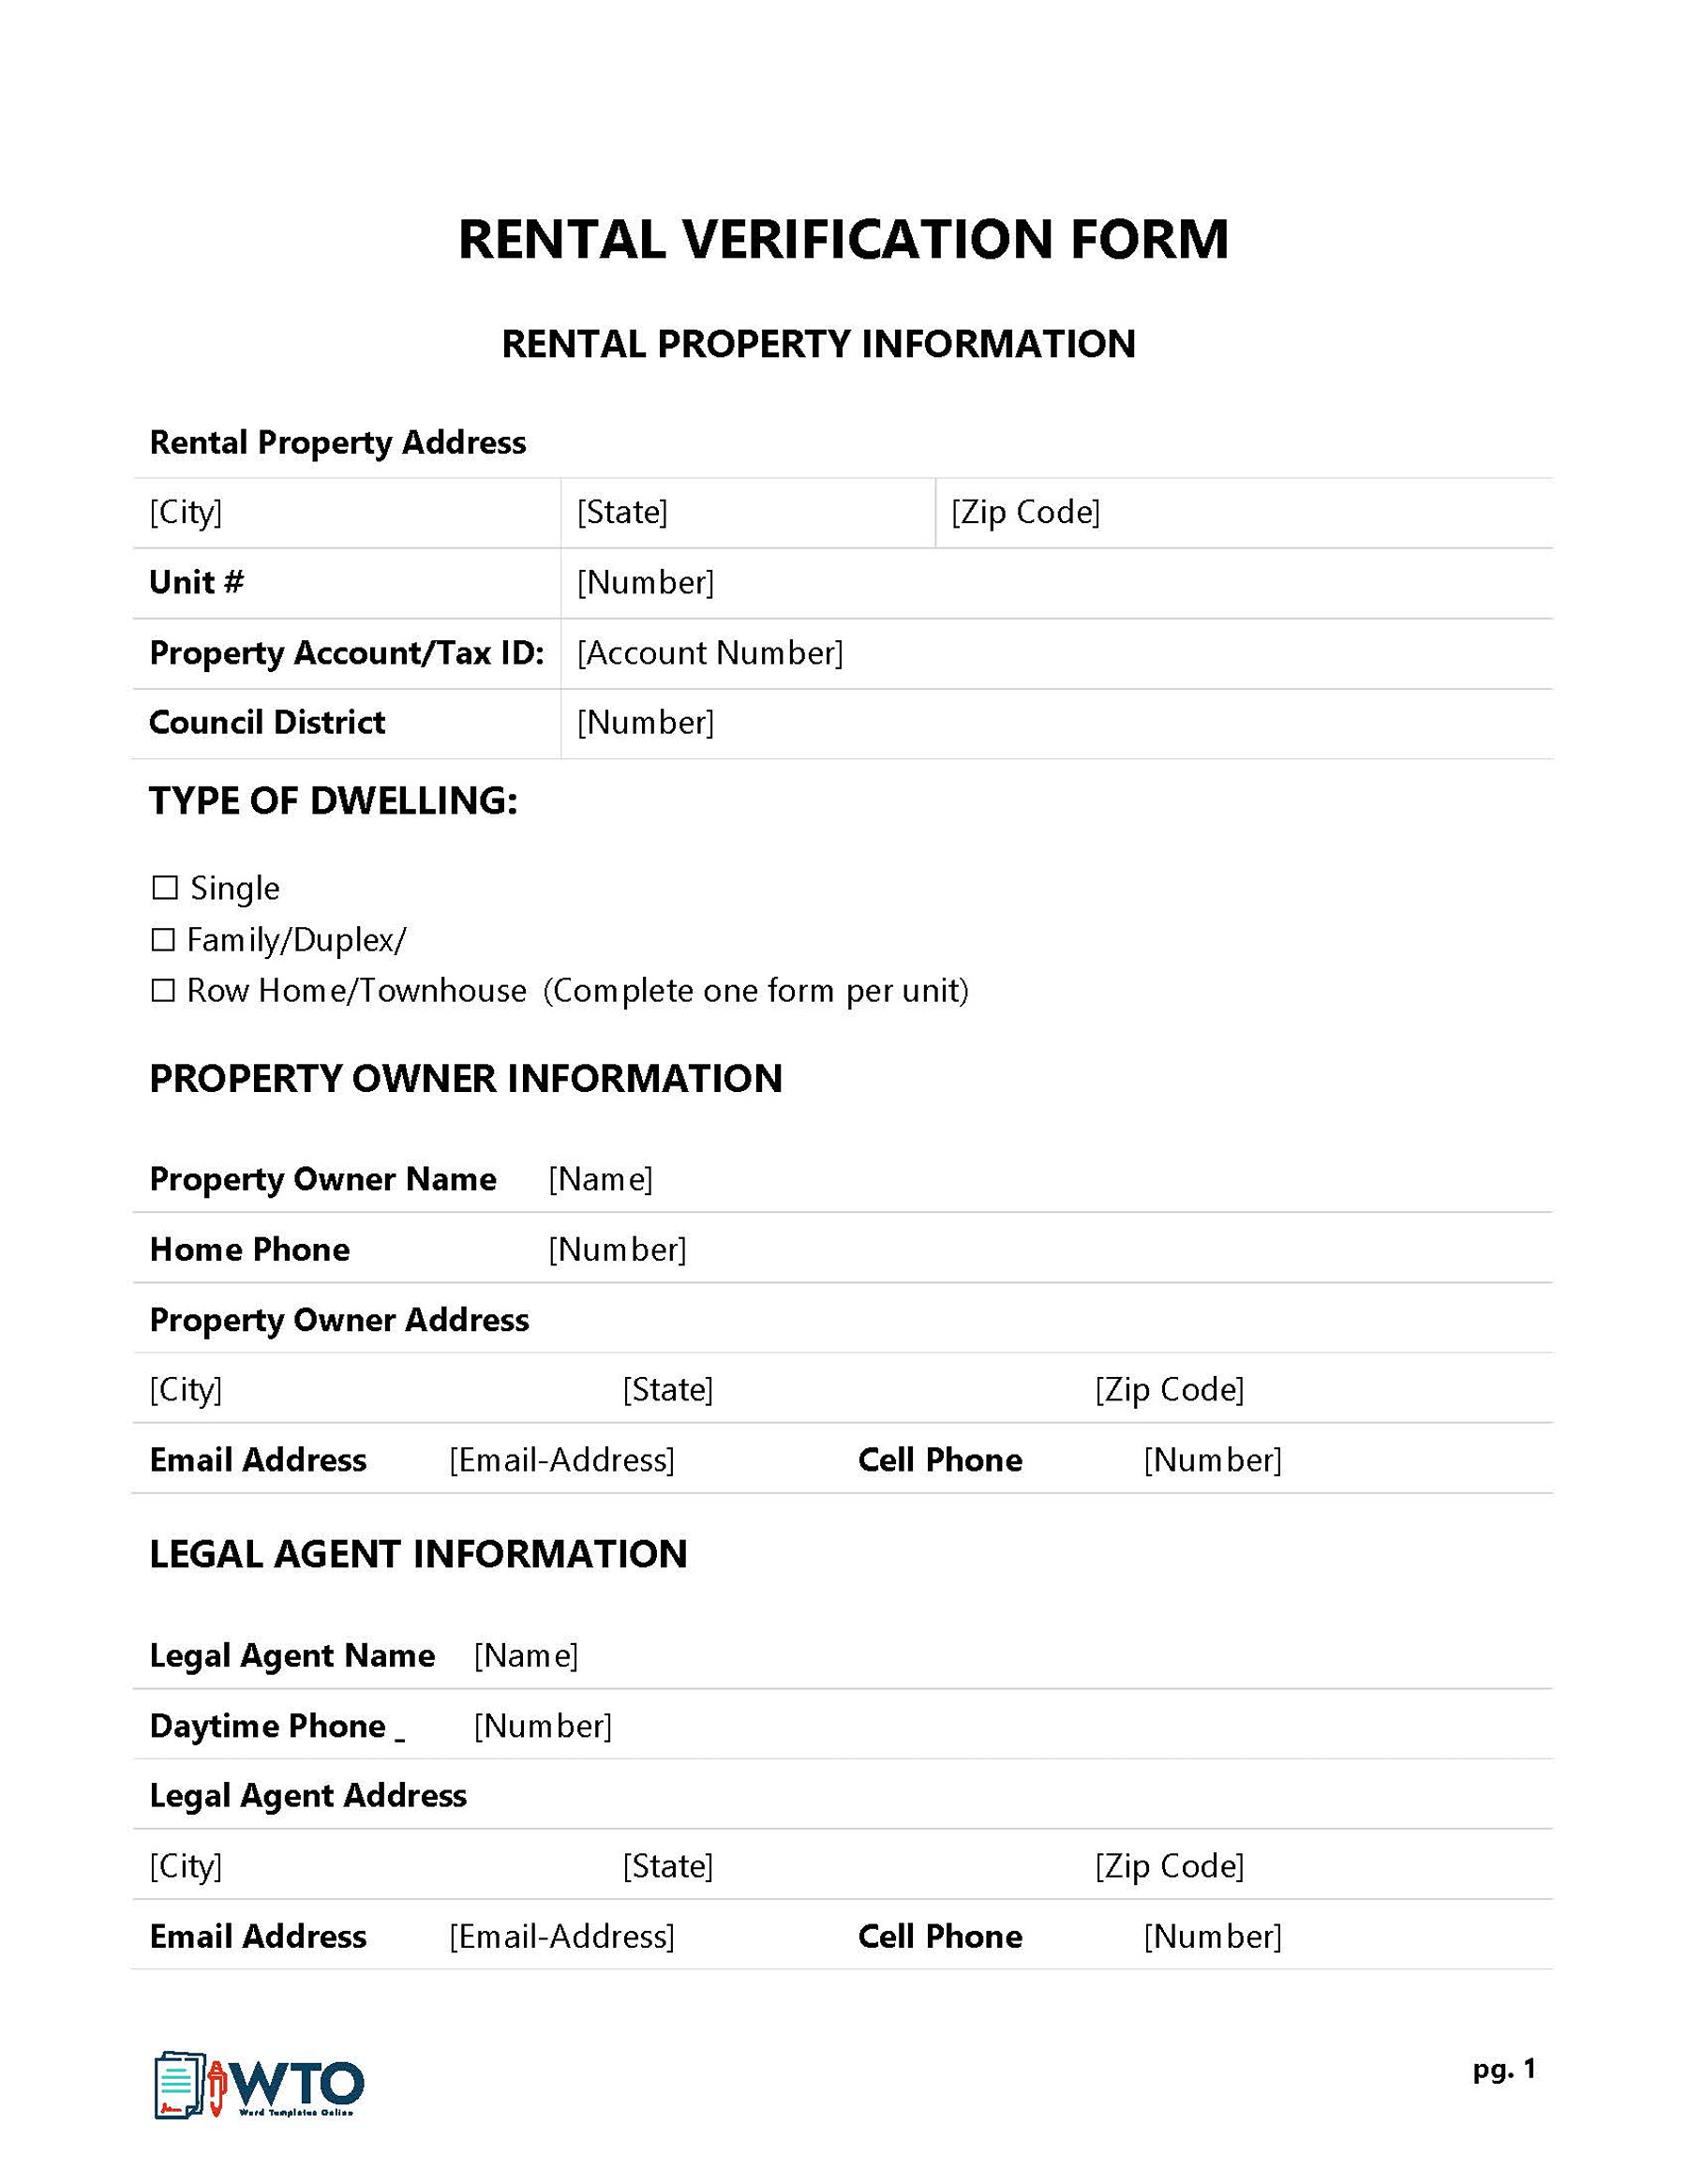 Rental Verification Form - Printable Template